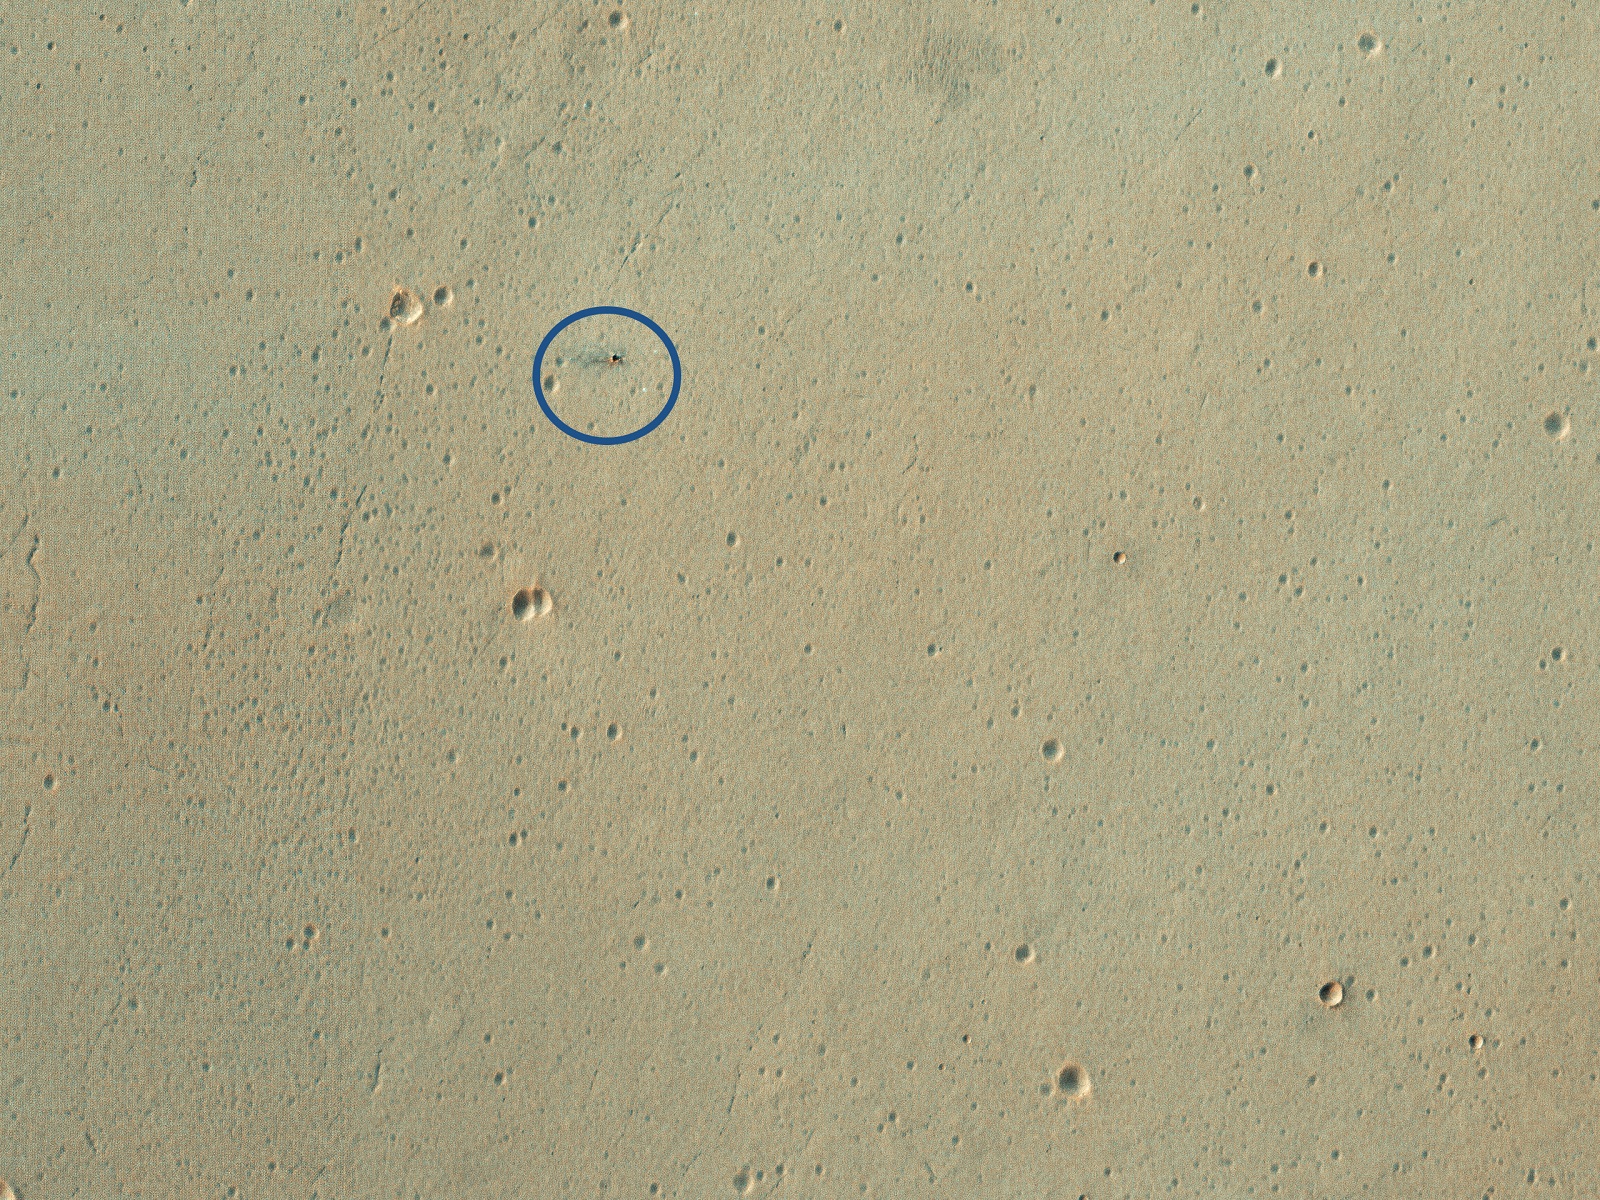 Mars Reconnaissance Orbiter Wallpapers